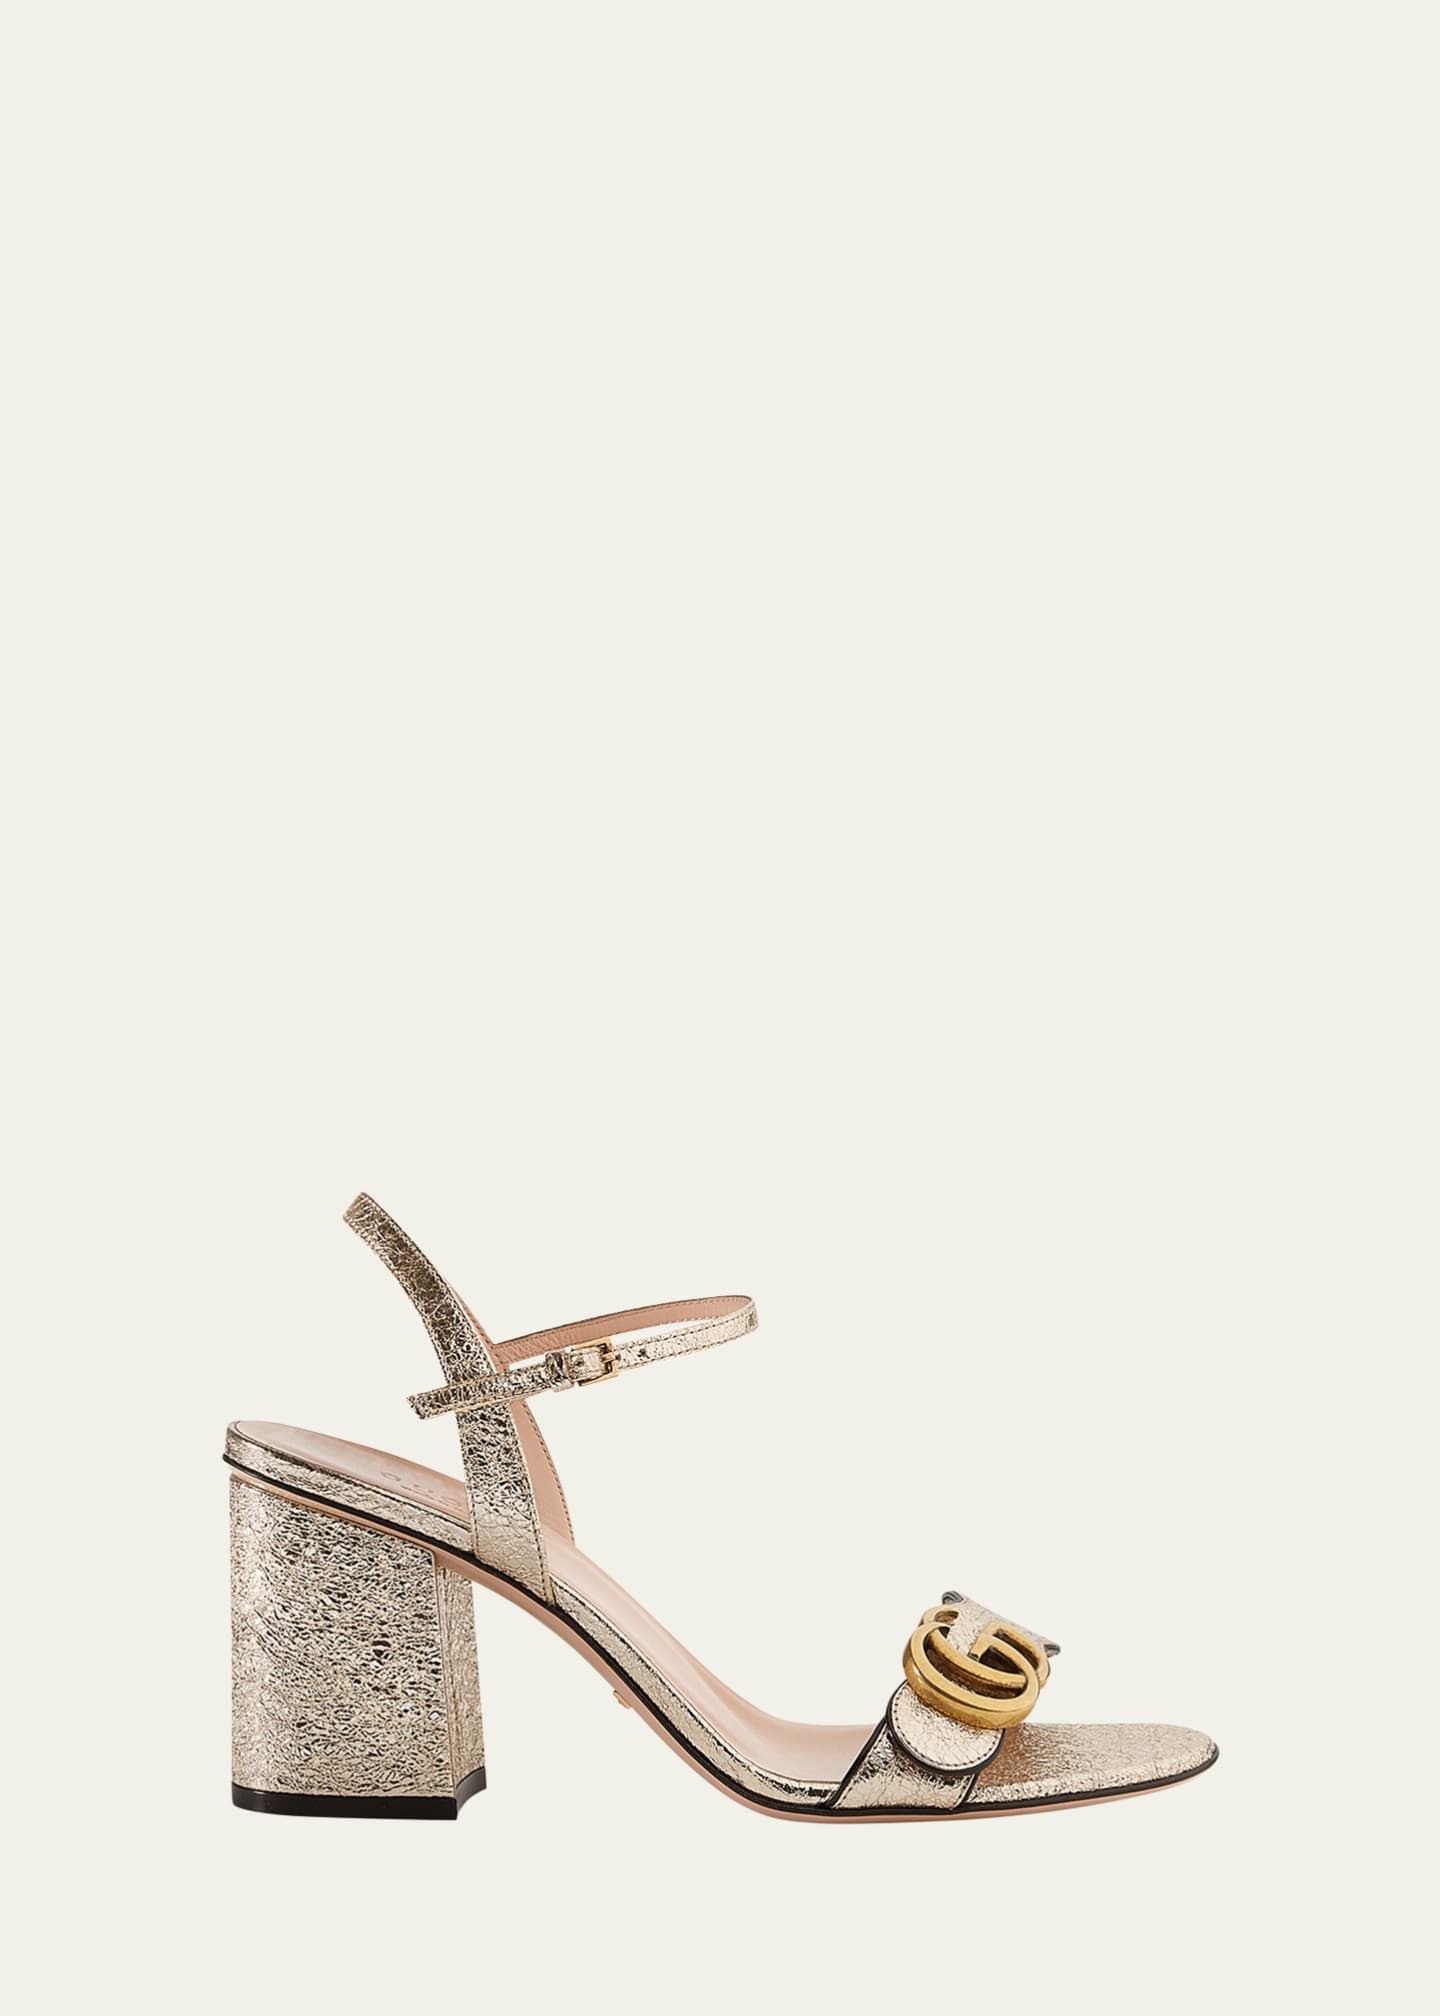 Gucci Marmont Metallic High-Heel Sandals Image 1 of 3